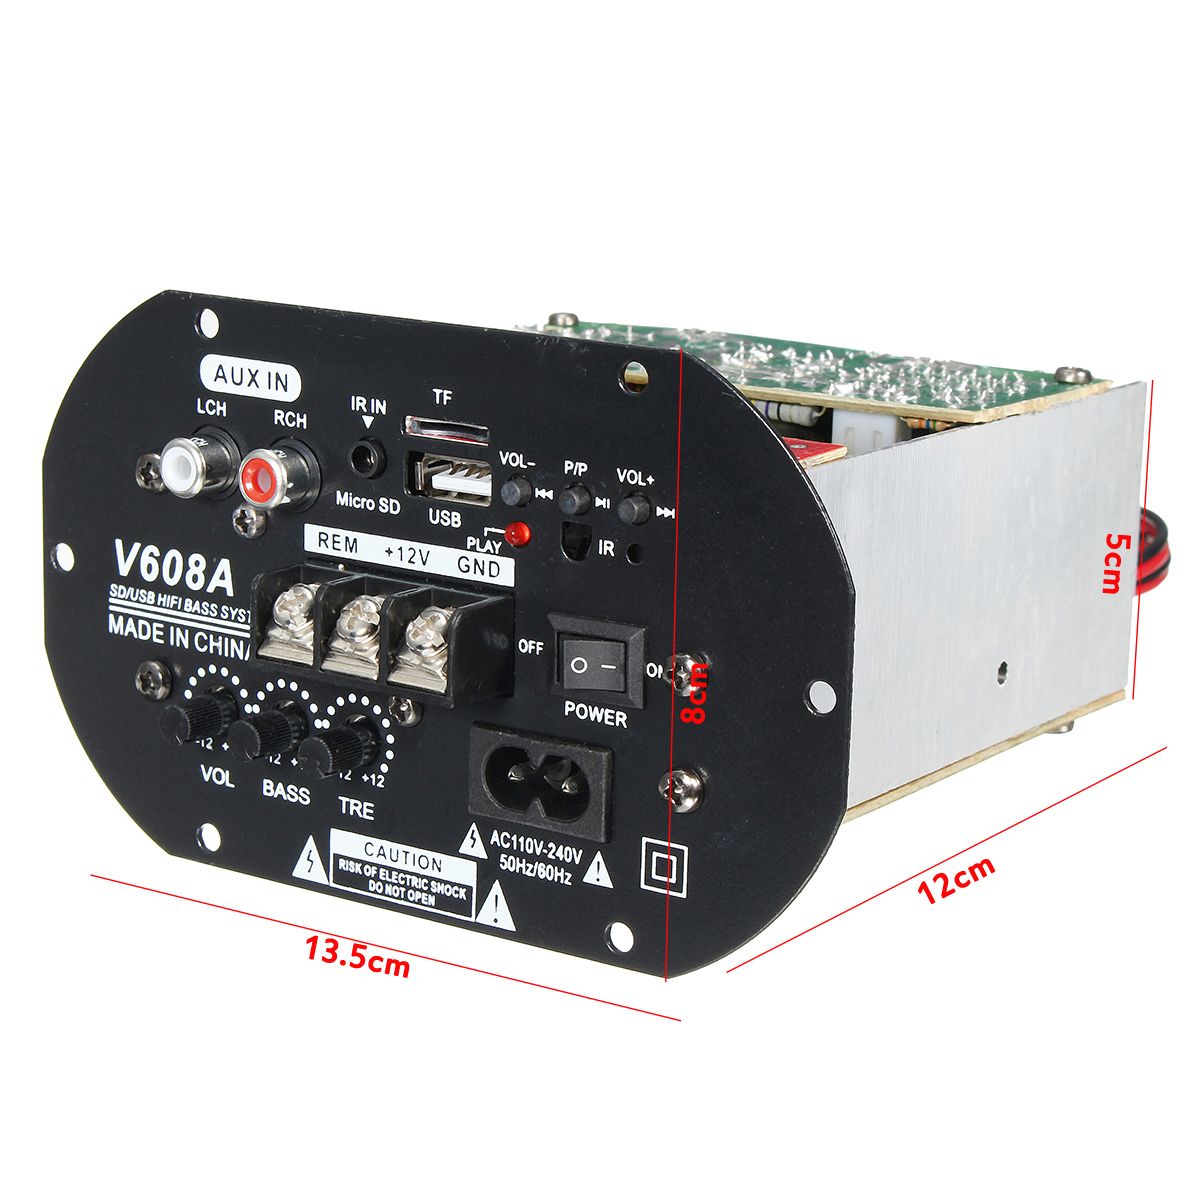 V608A-80W-High-Power-Bass-Car-Hi-Fi-Subwoofer-Amplifier-Board-Module-TF-USB-110V-220V-1183113